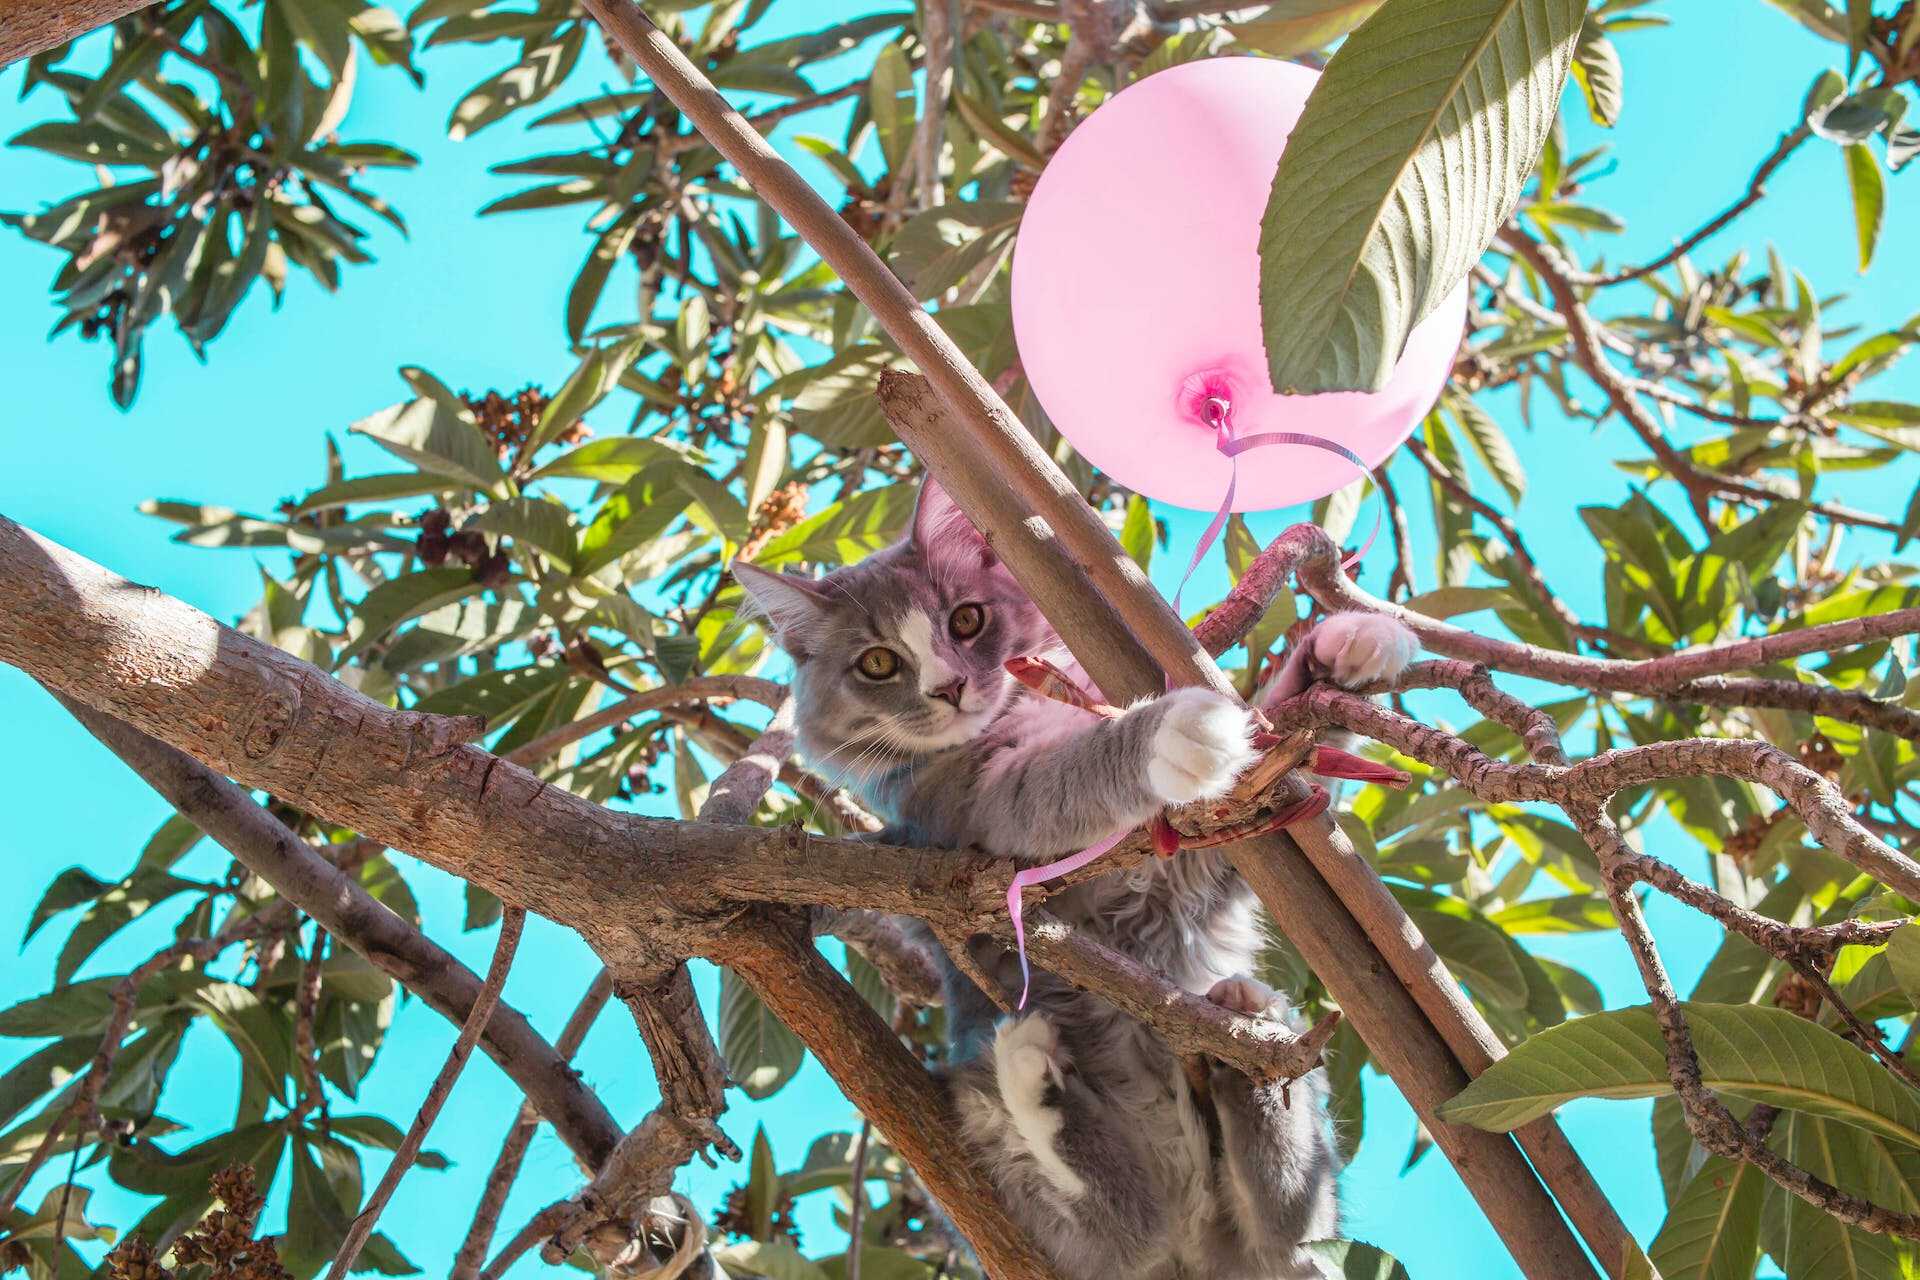 A cat climbing a tree next to a pink balloon